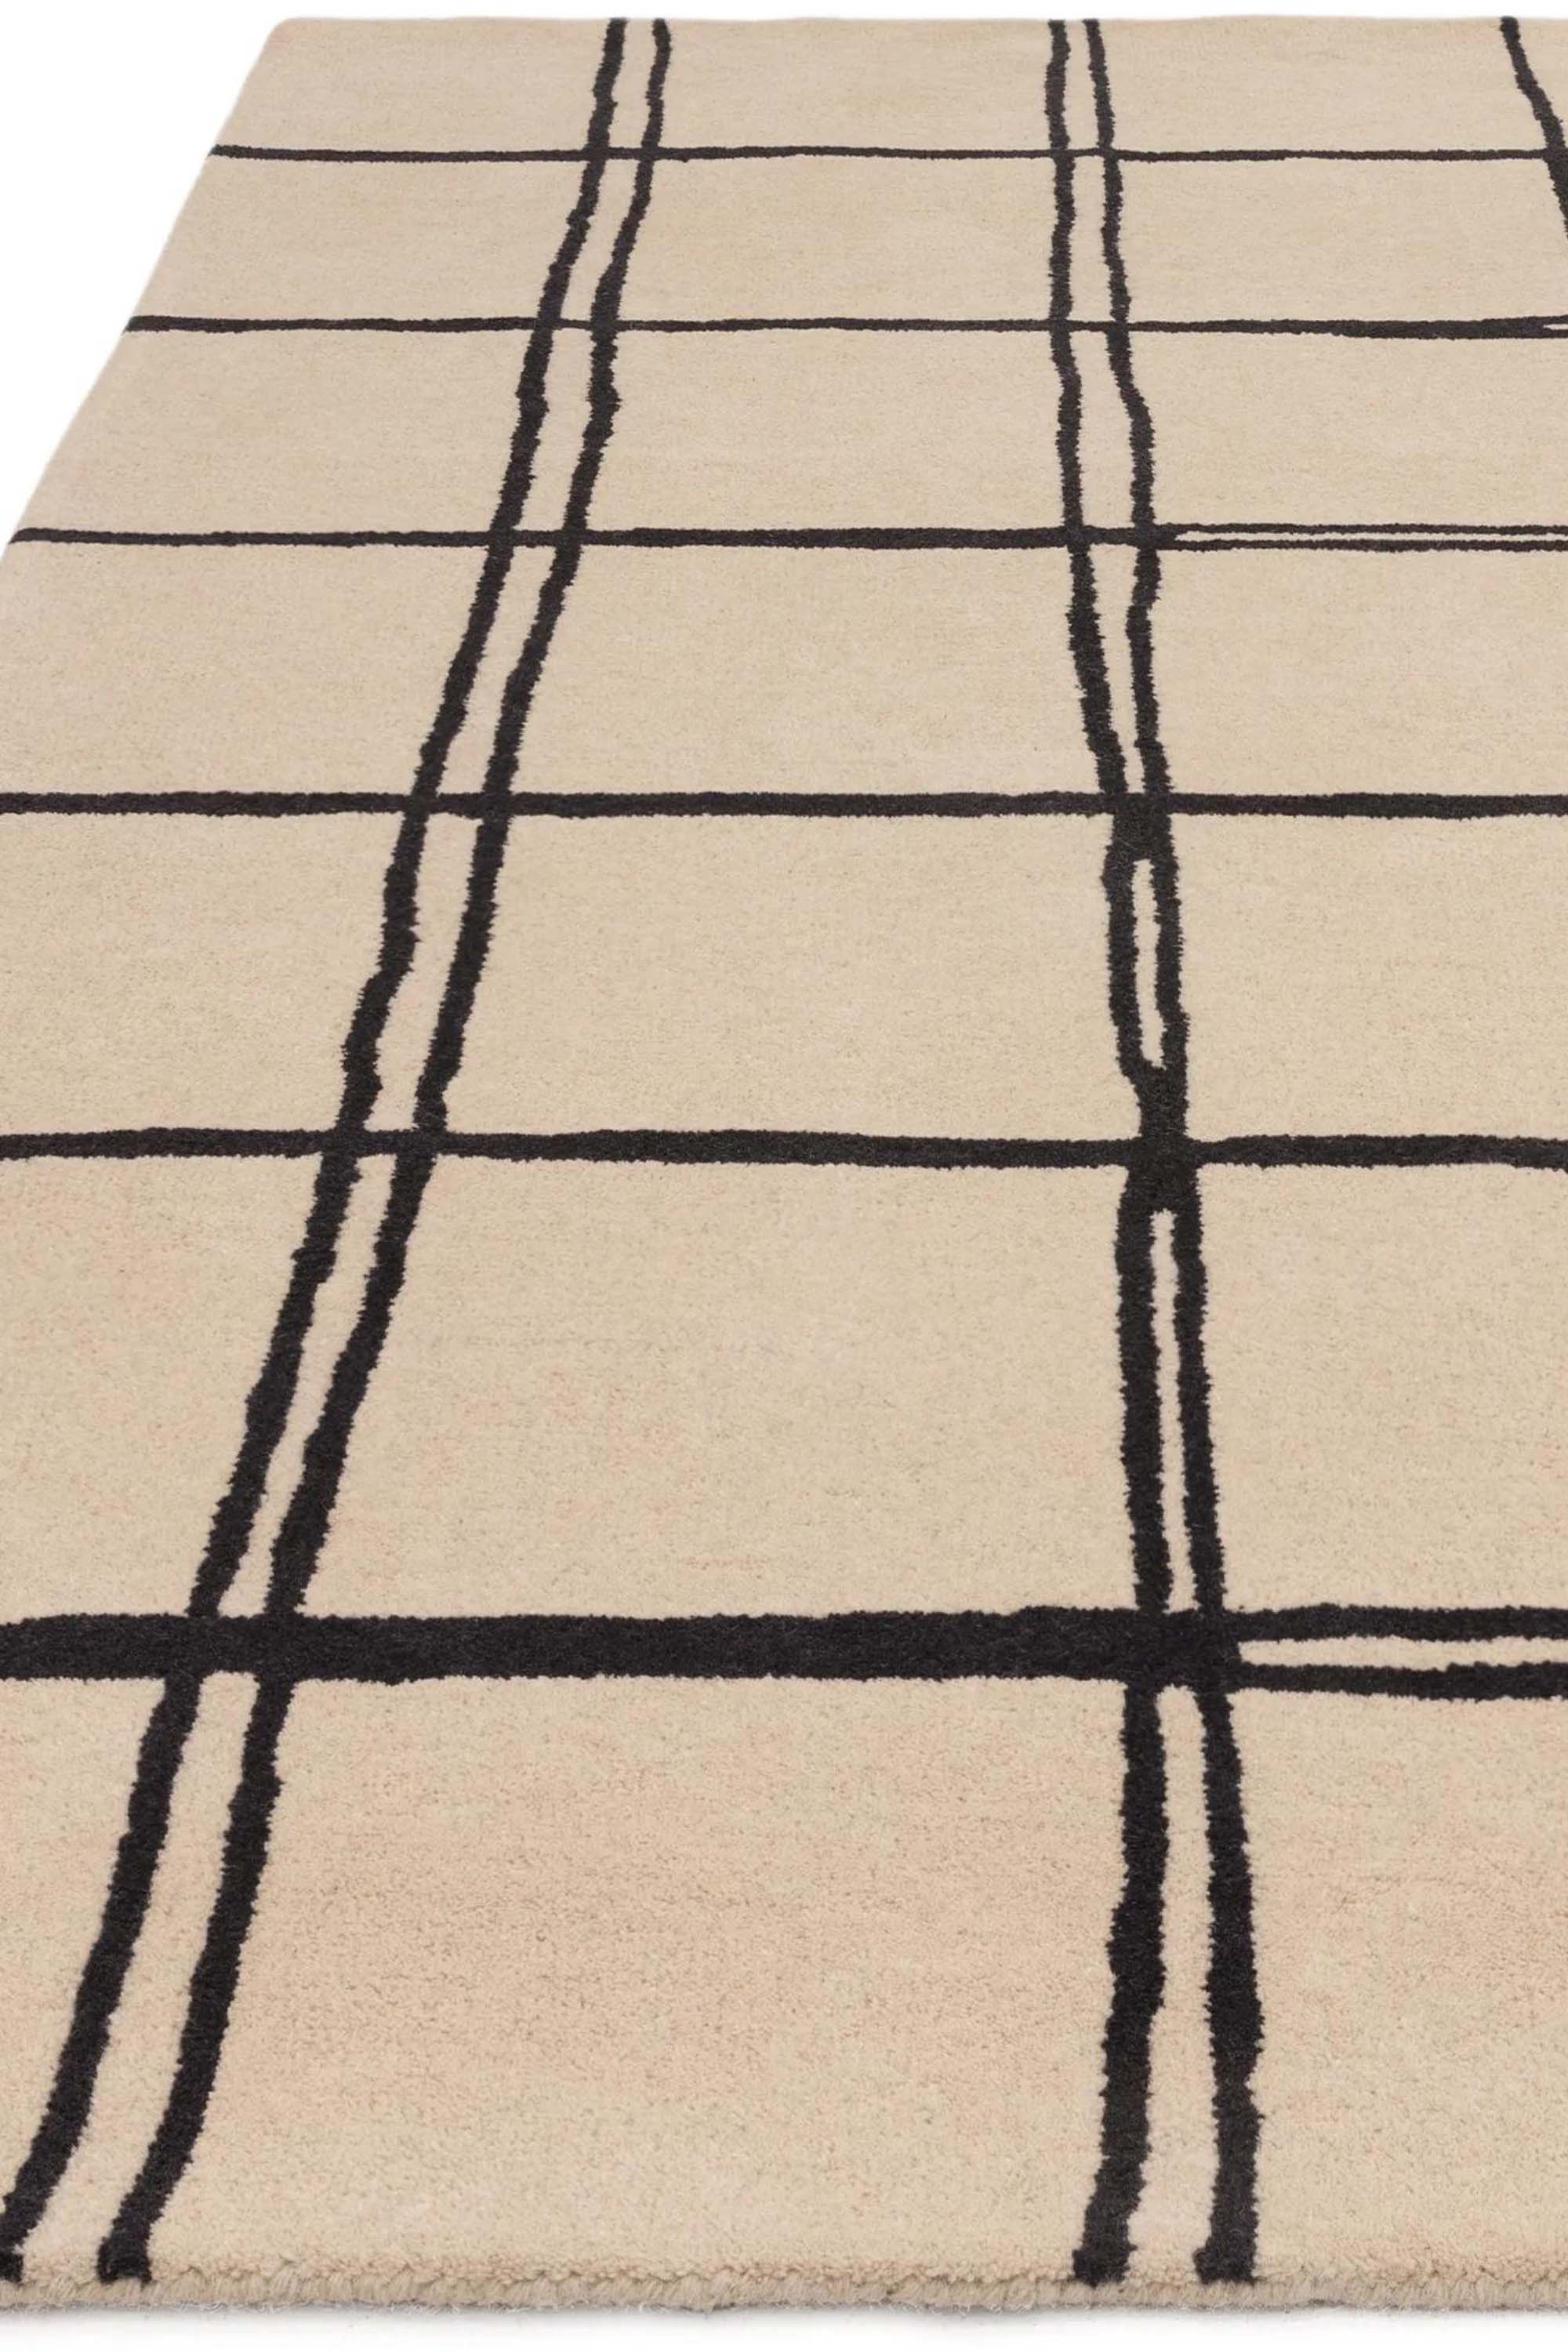 Monochrome rug with minimal geometric pattern 